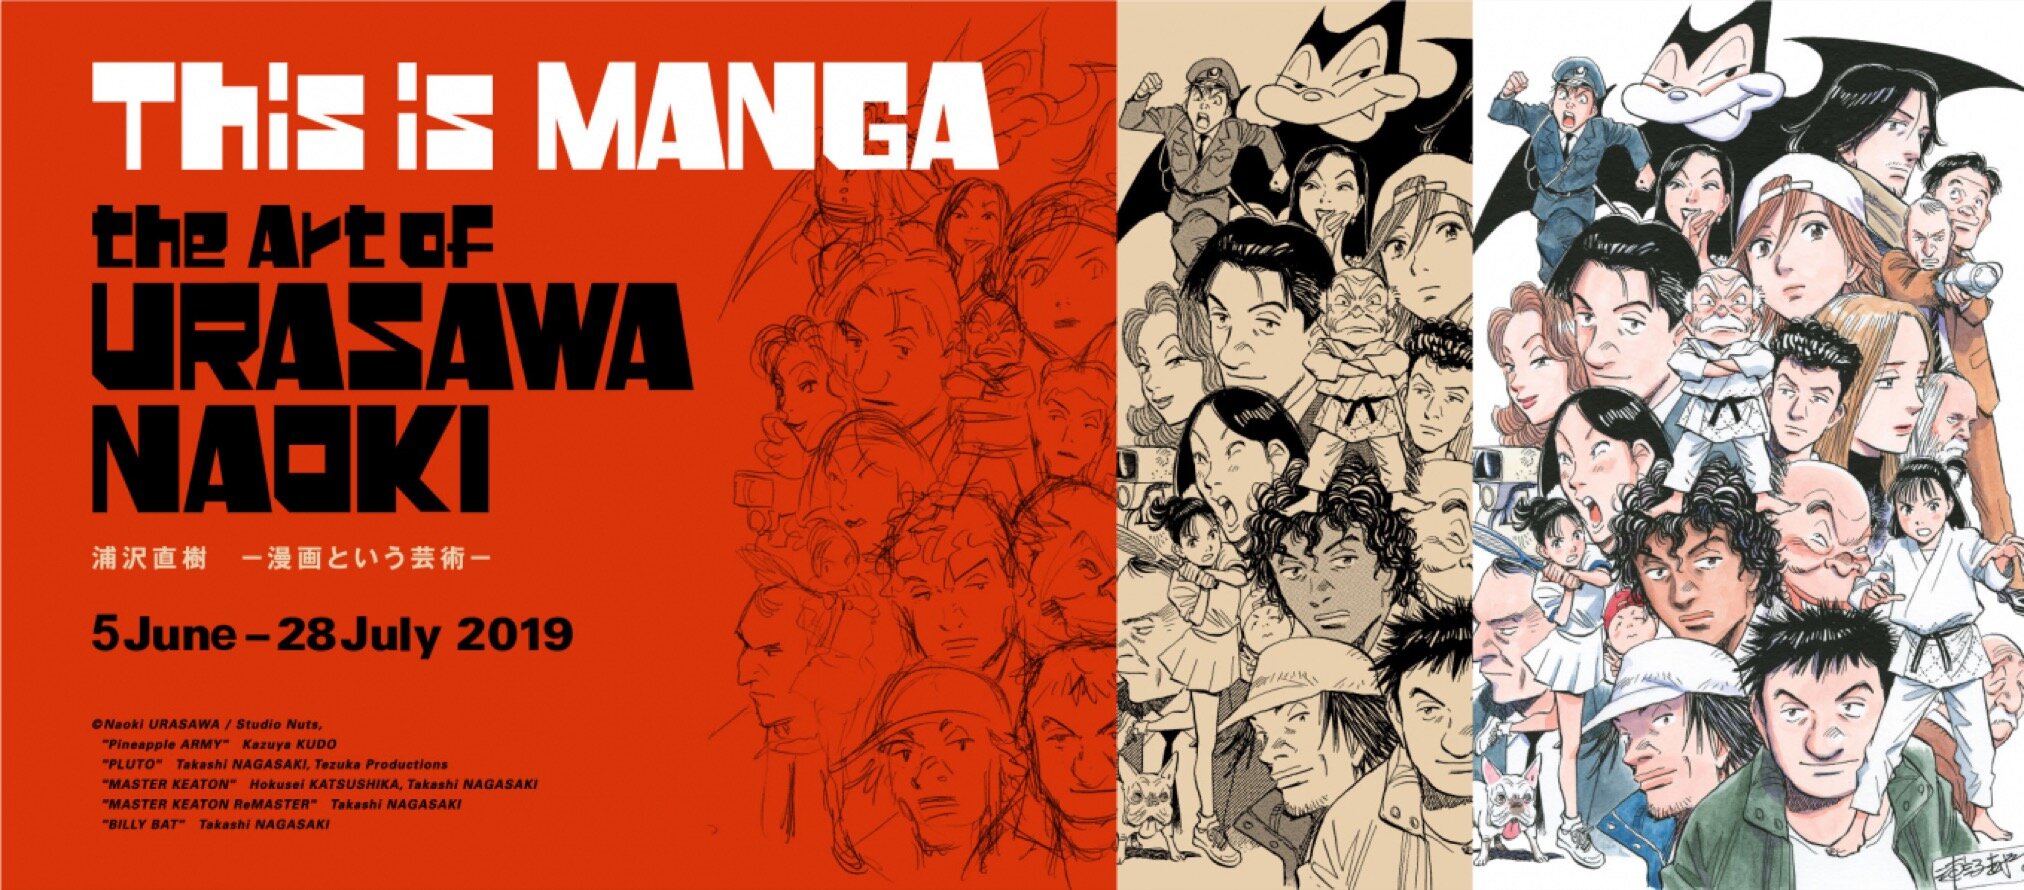 20th Century Boys' Urasawa to Launch Billy Bat Manga - News - Anime News  Network